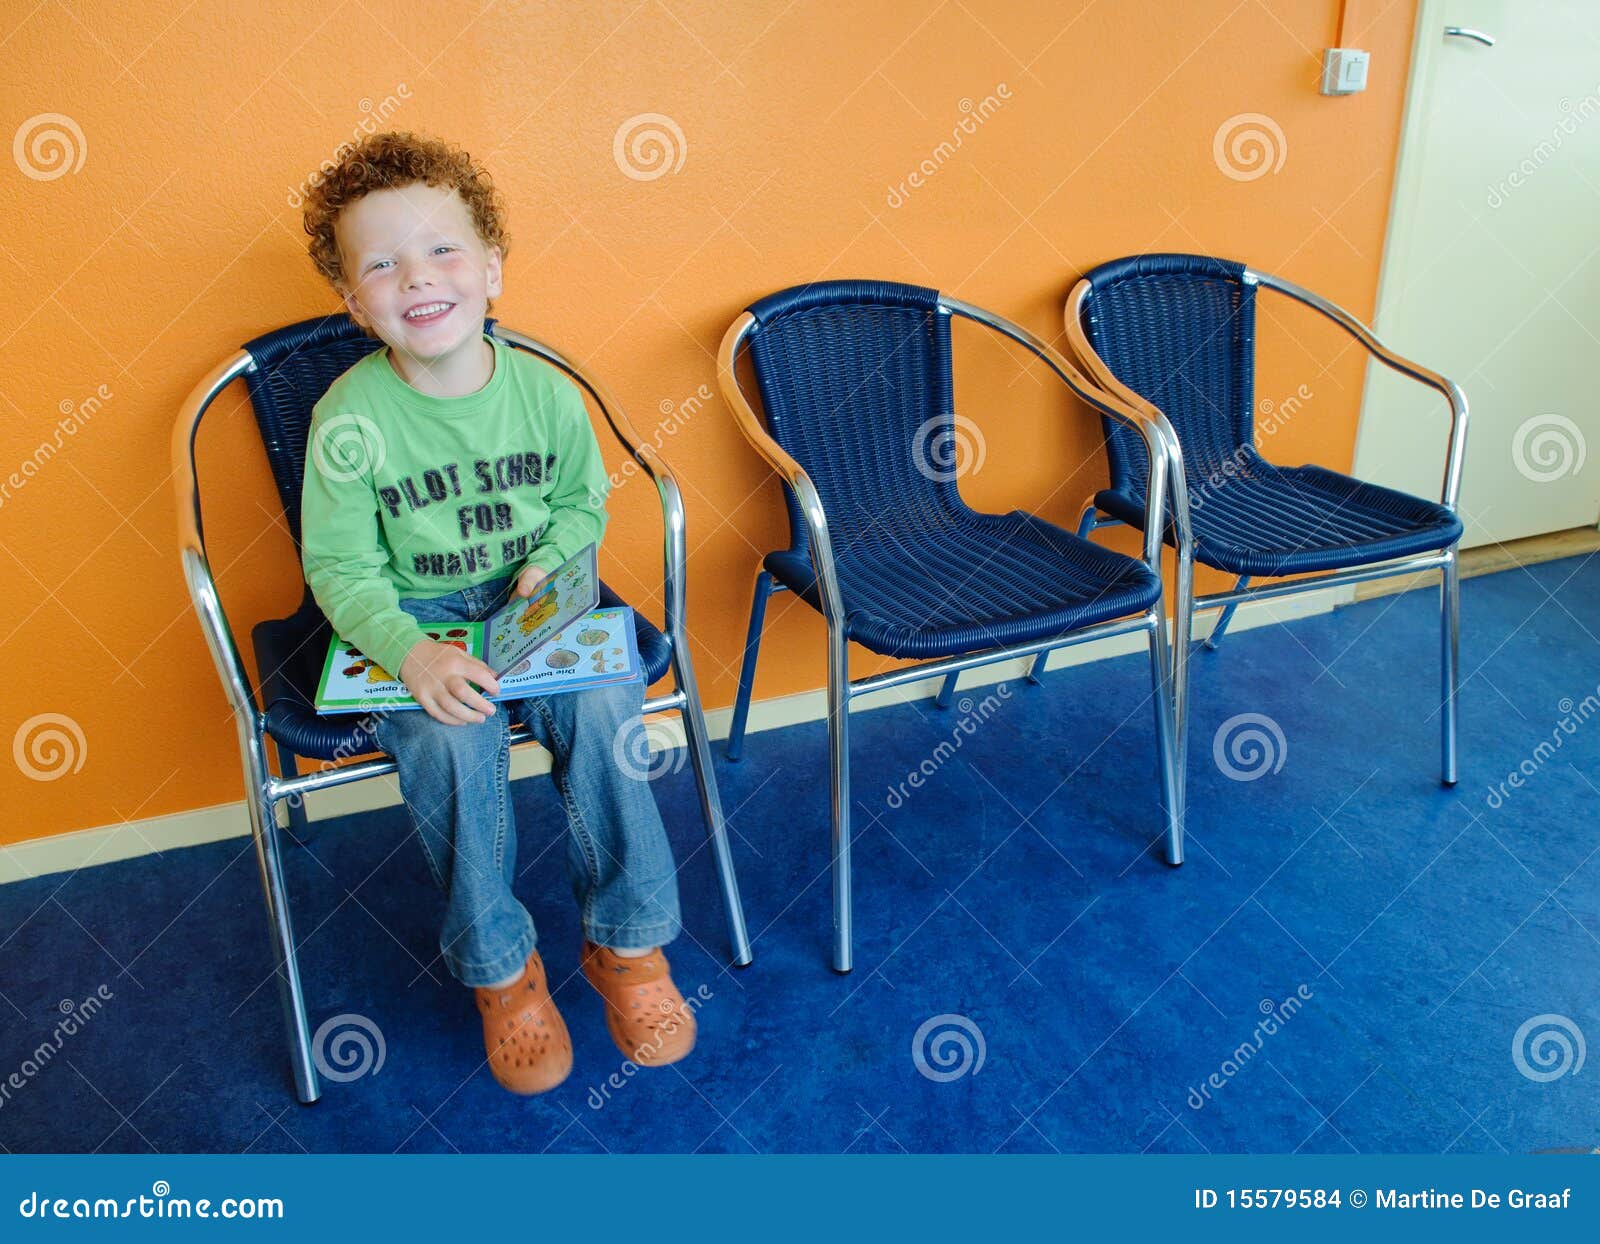 kids waiting room furniture